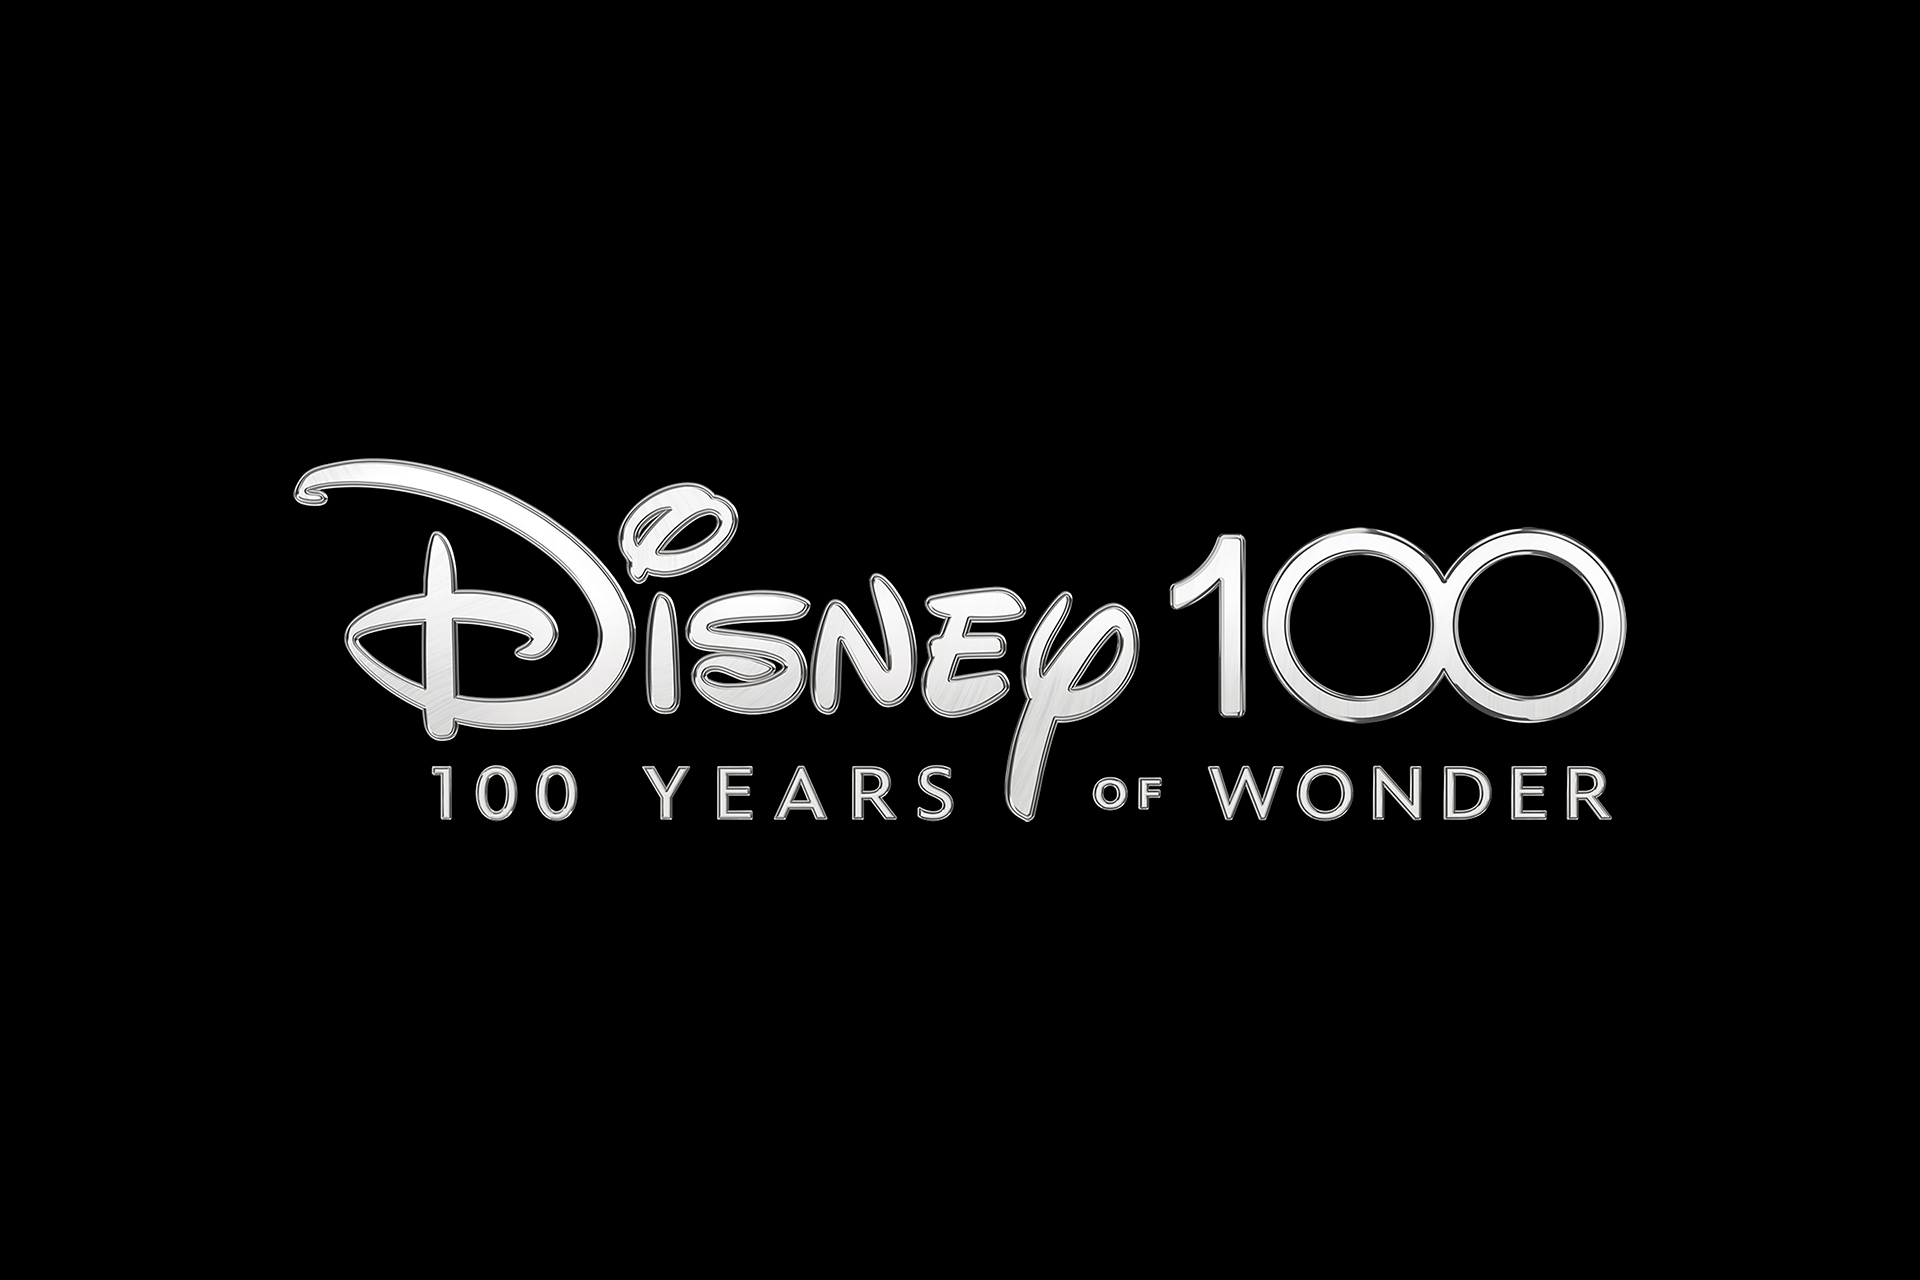 Disney 100 Years of Wonder Logo - Featured Image